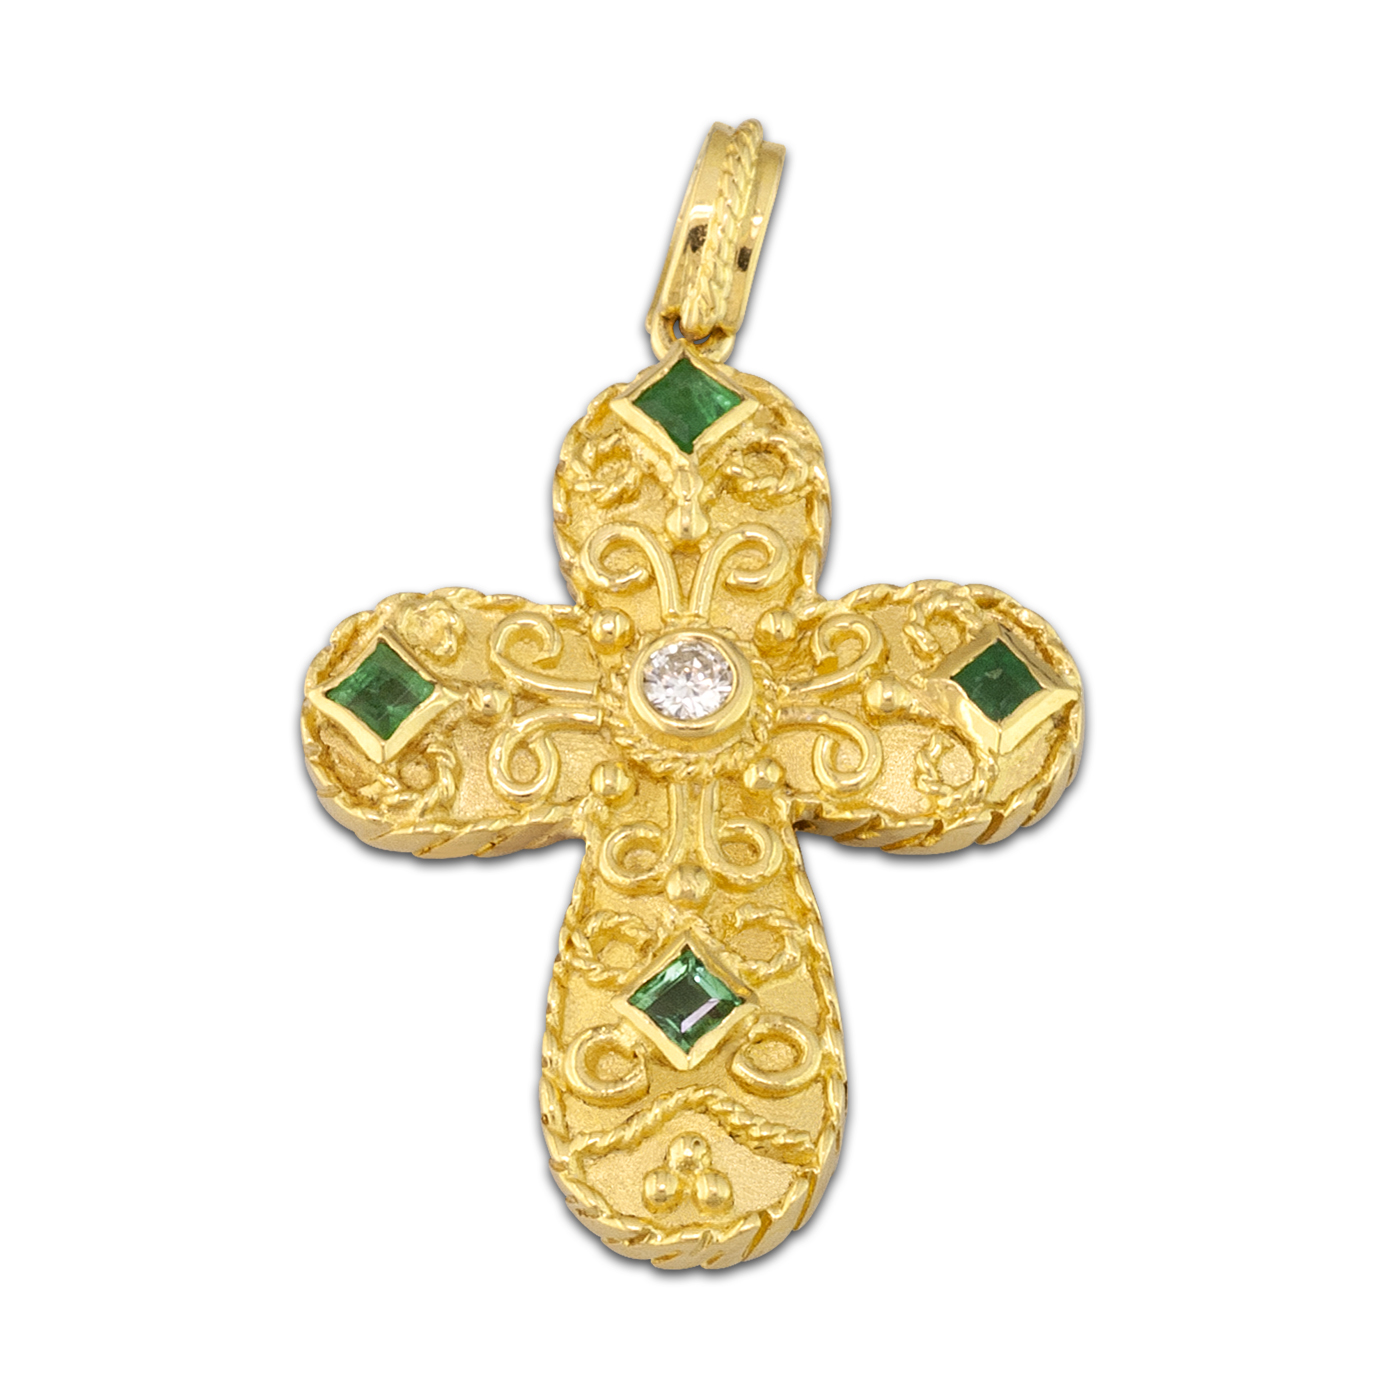 Byzantine gold Cross with precious stones